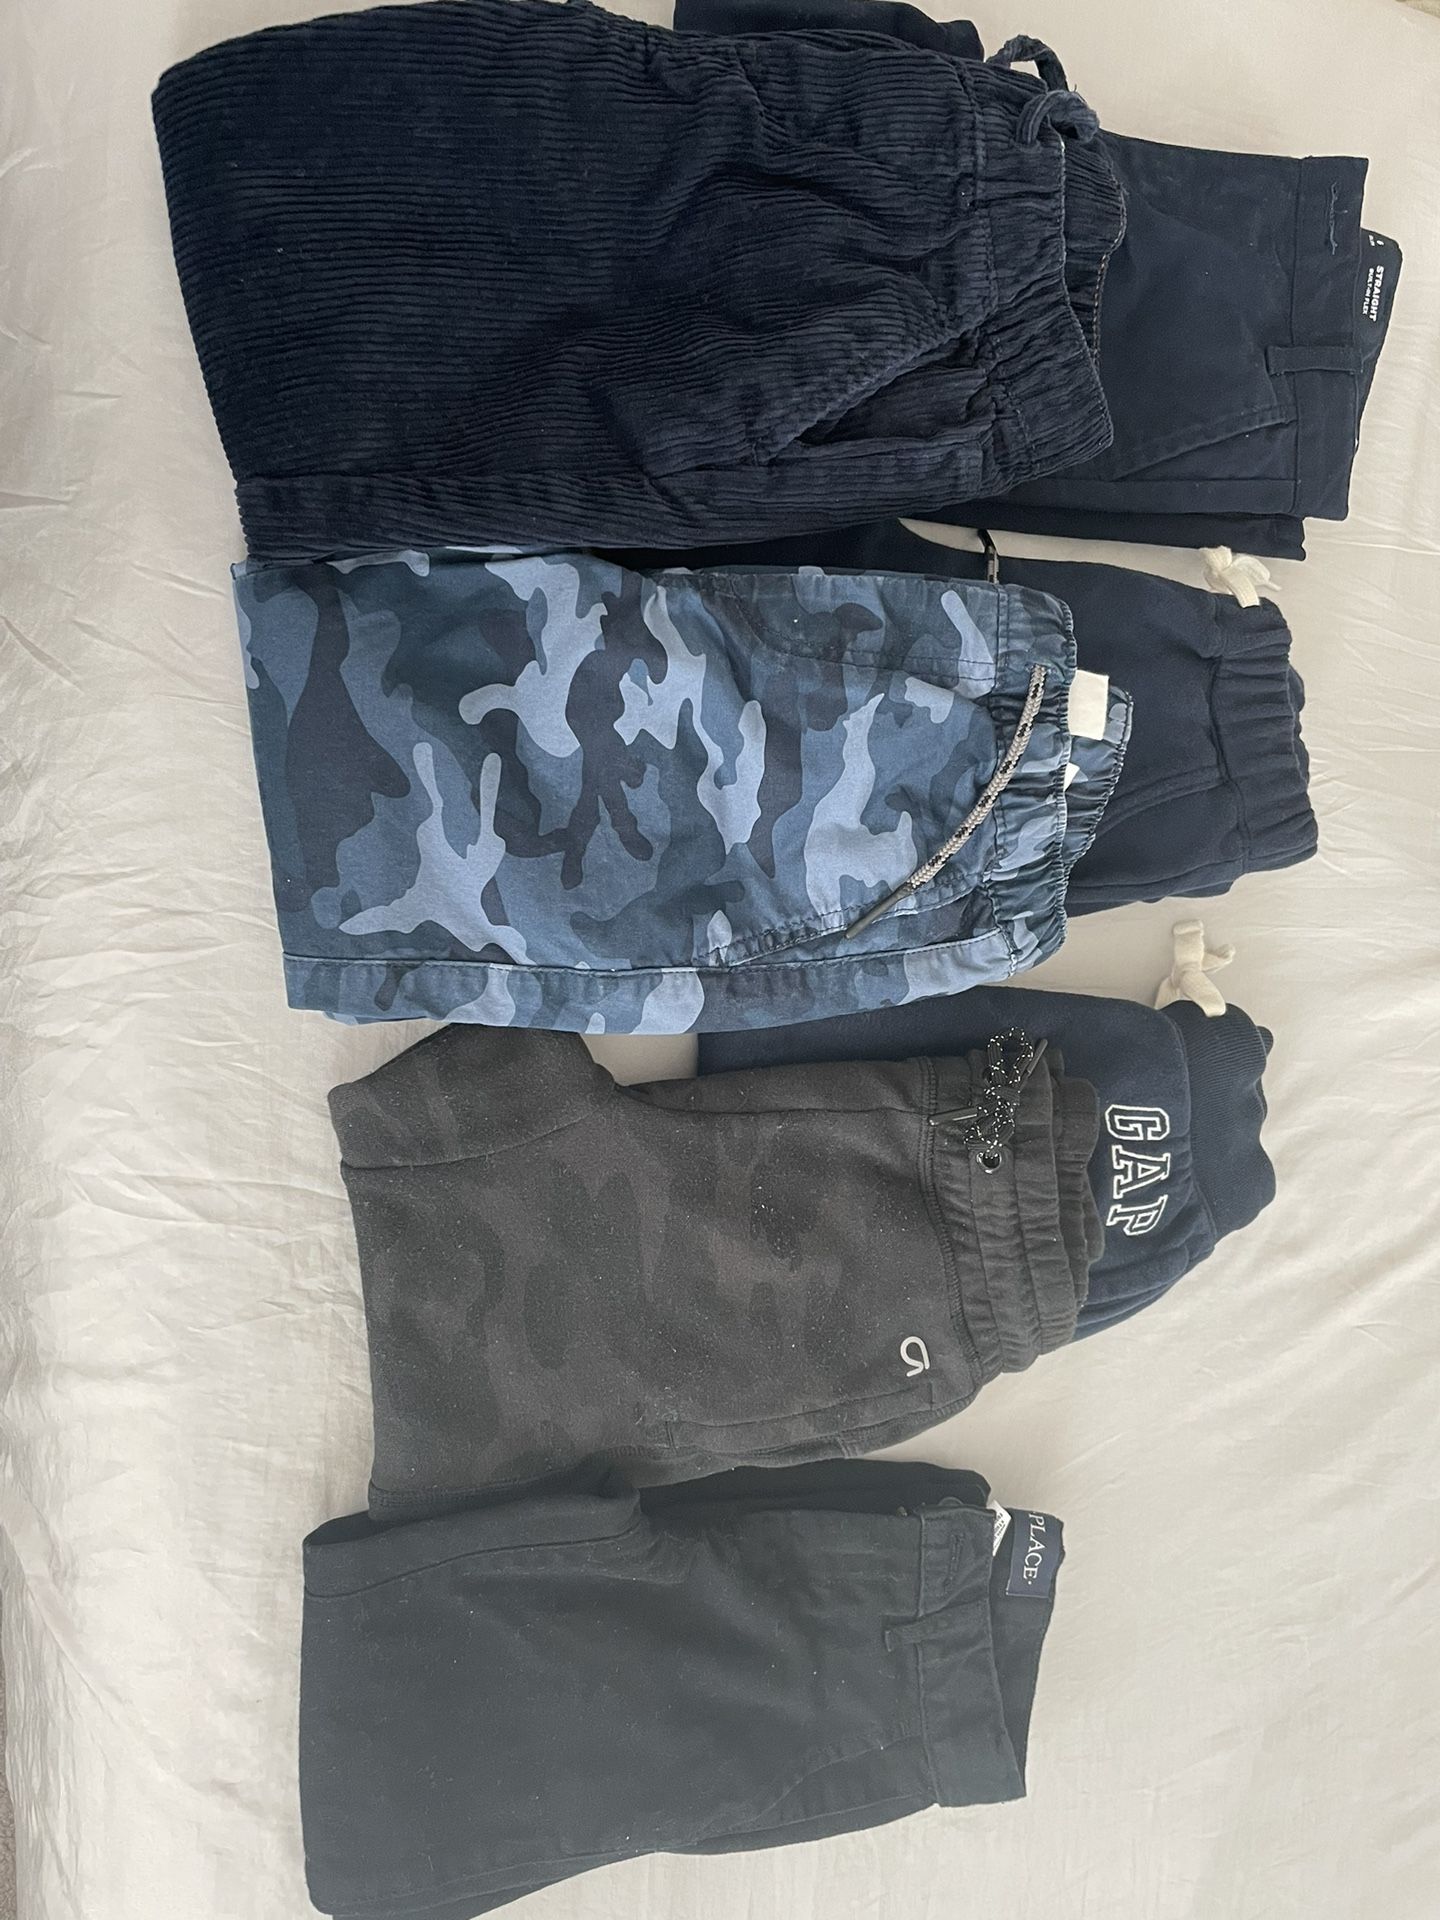 Boy’s clothes/shoes/jacket/shirts